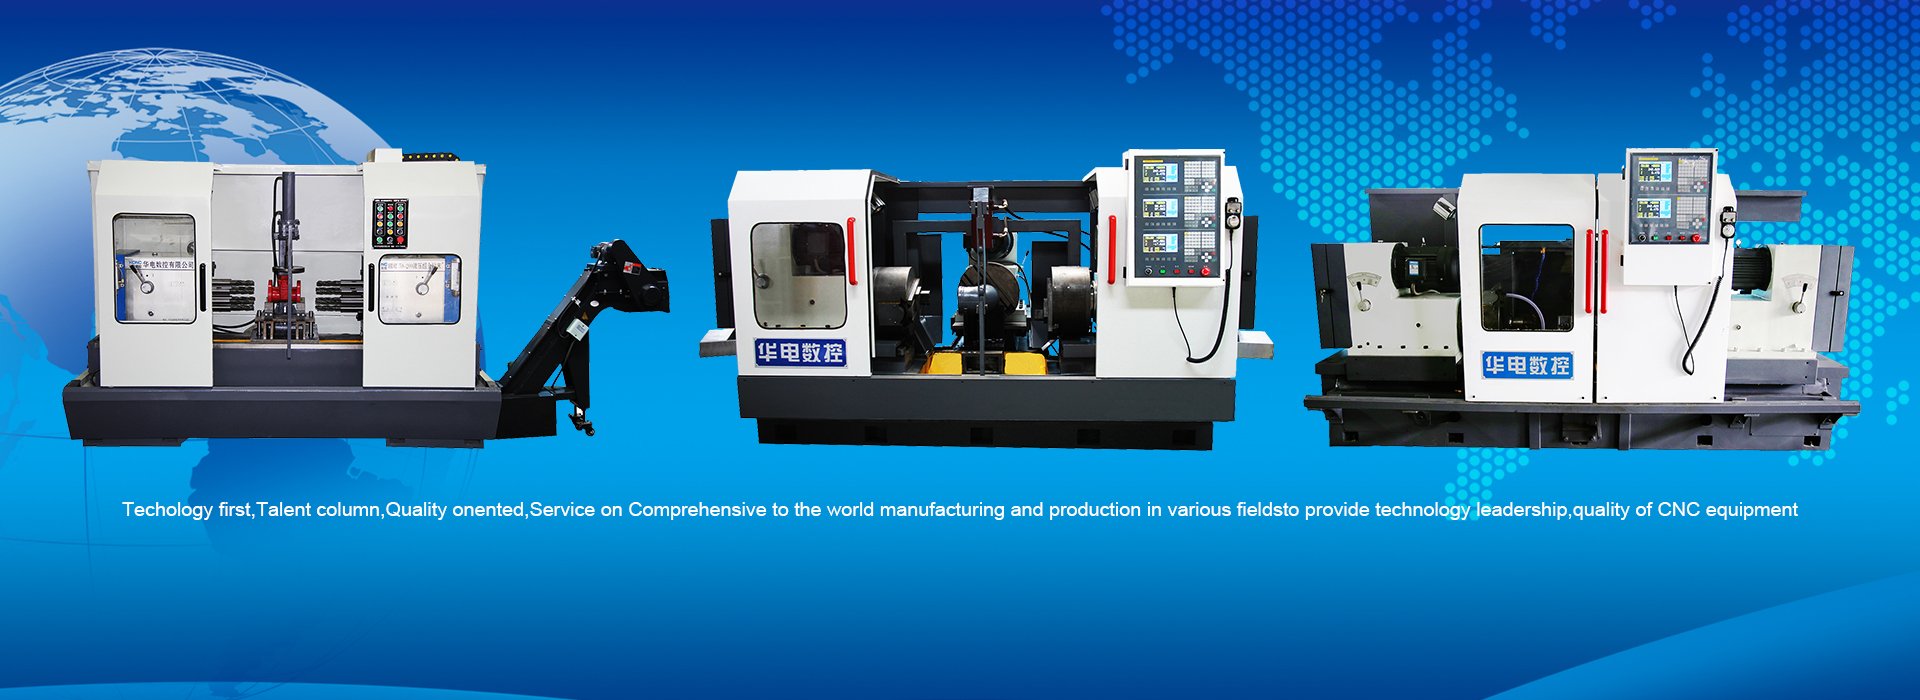 HS-16 Hob Sharpening Machine - Detroit International Advanced Manufacturing  Technology Show(DIAMTS)